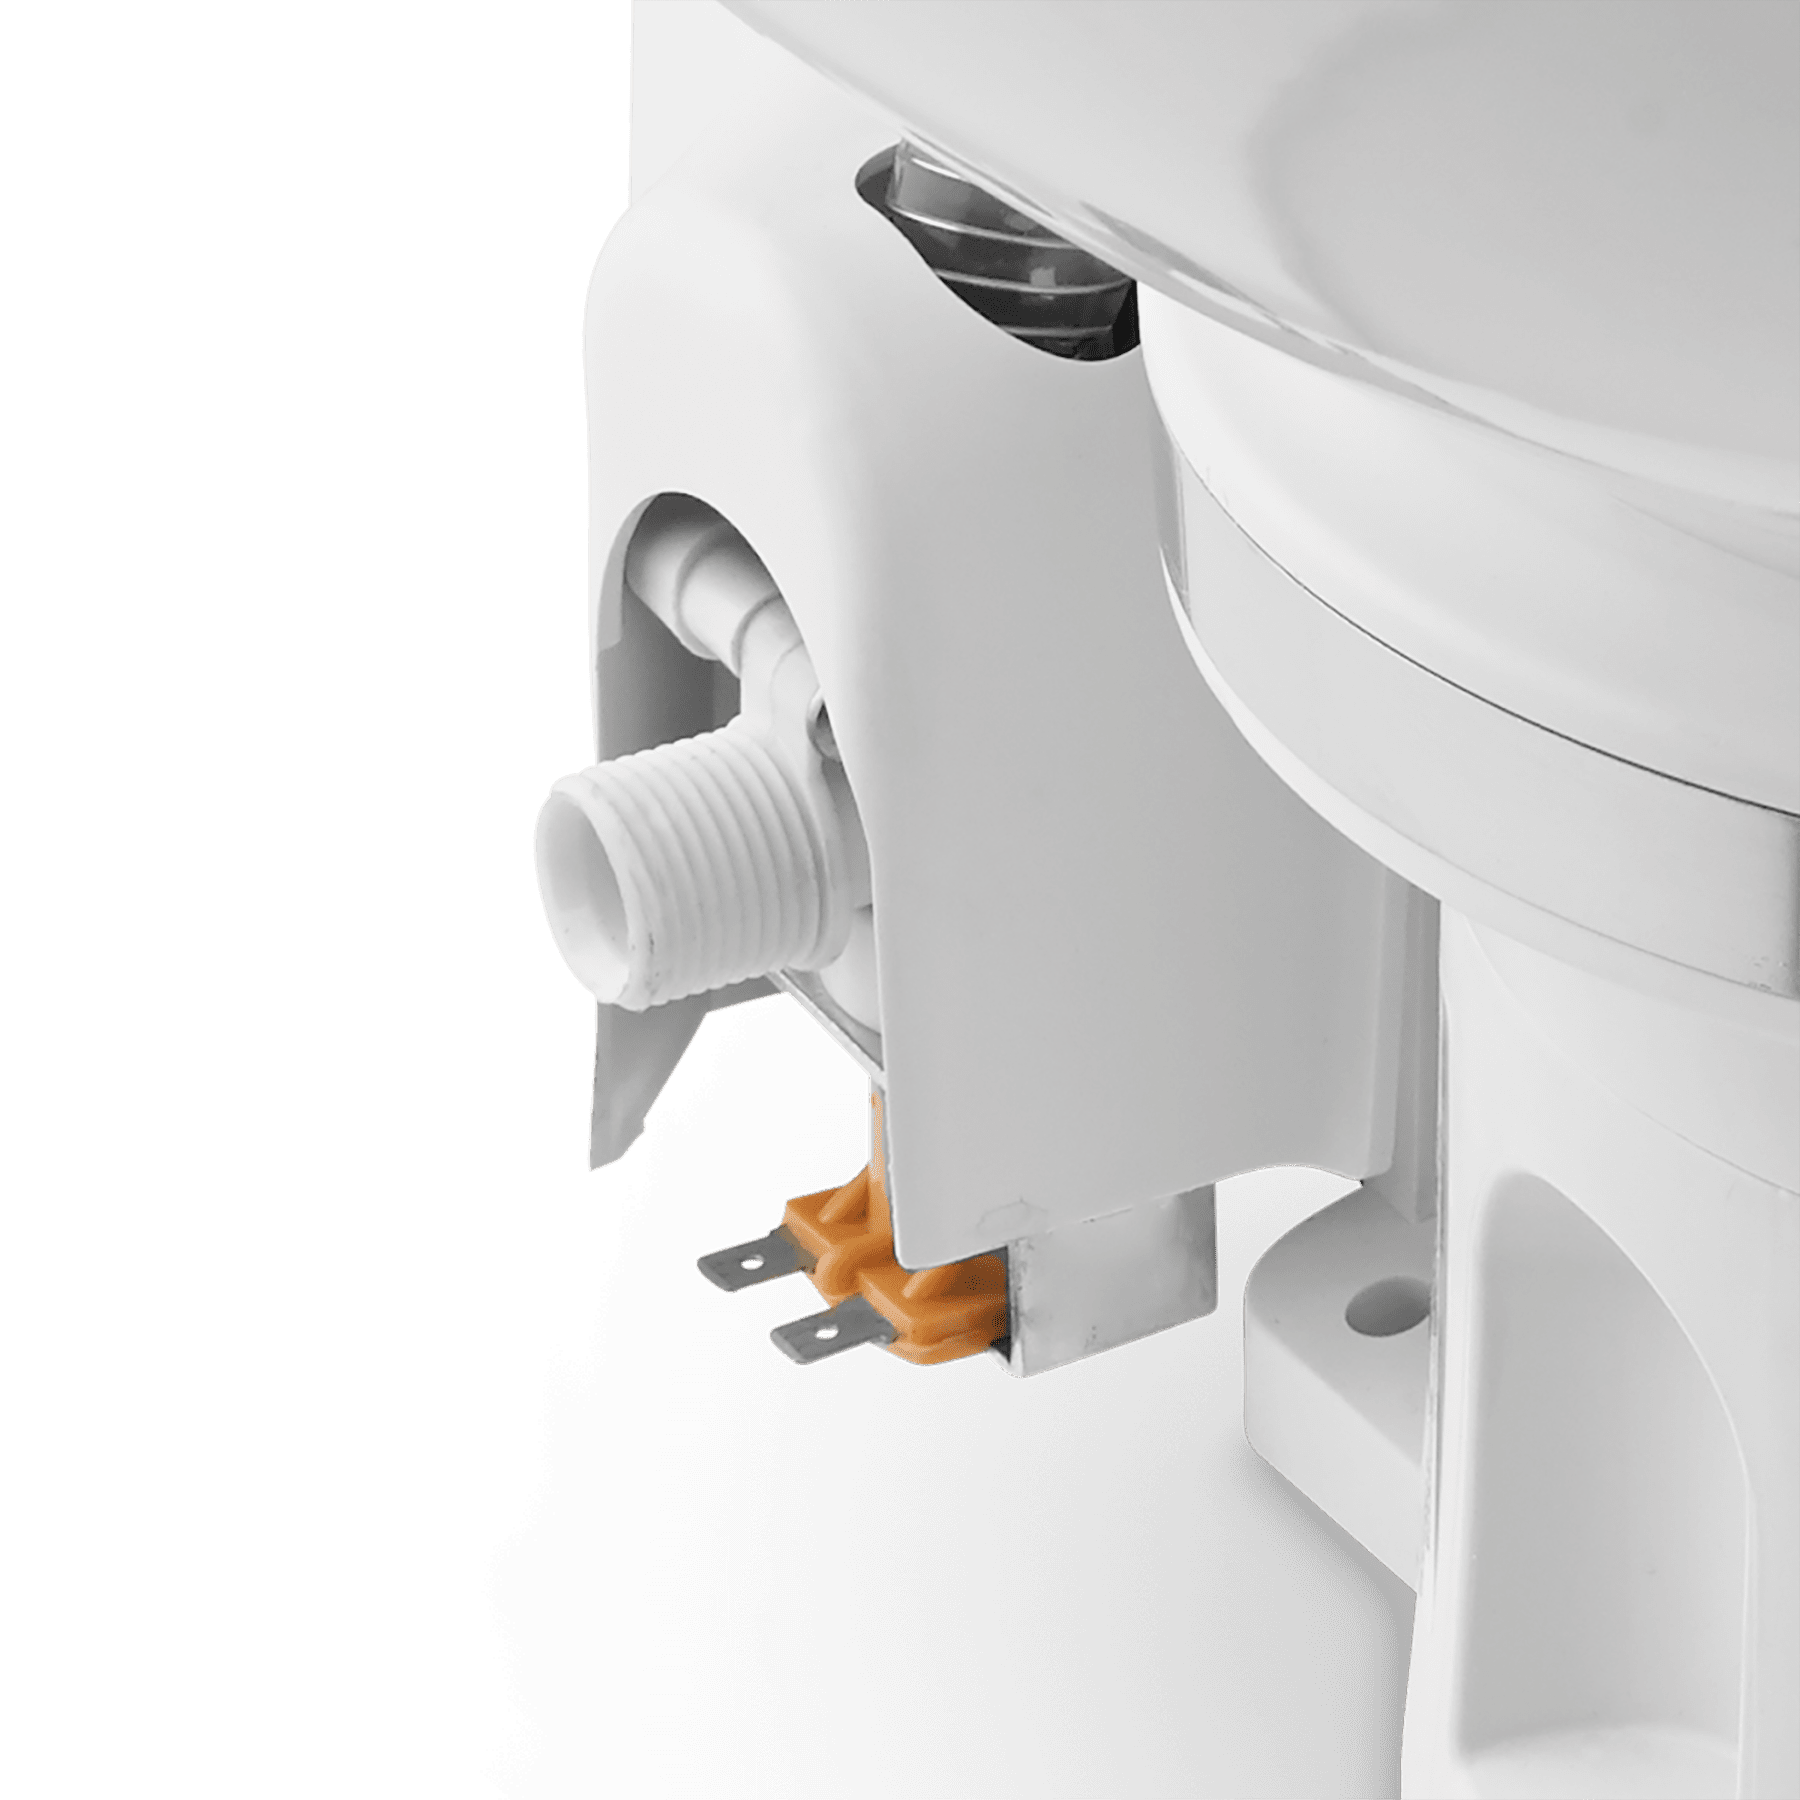 Dometic MasterFlush Toilet Model 8640 24V - bone (Standard Height)